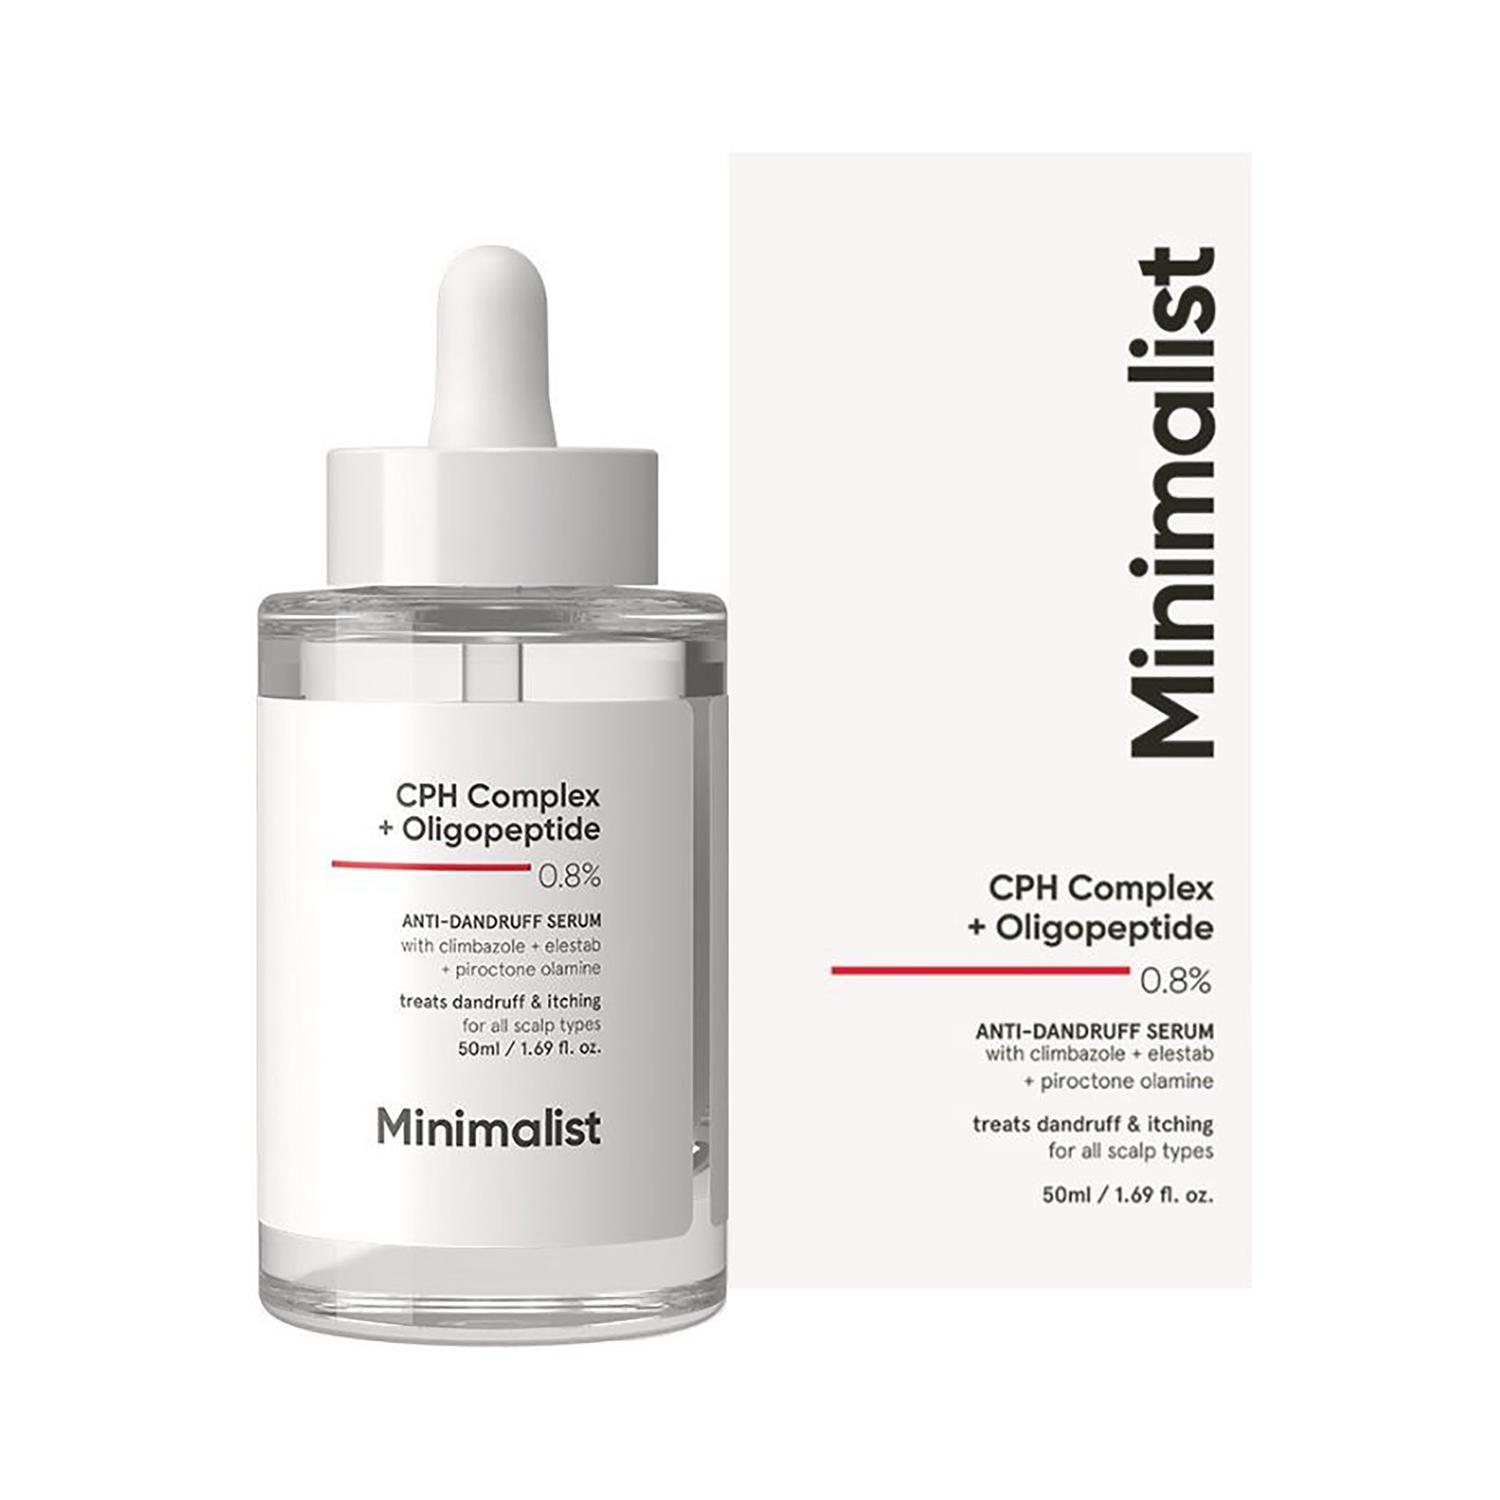 minimalist 0.8% cph complex + oligopeptide anti-dandruff serum treats dandruff & itching (50ml)